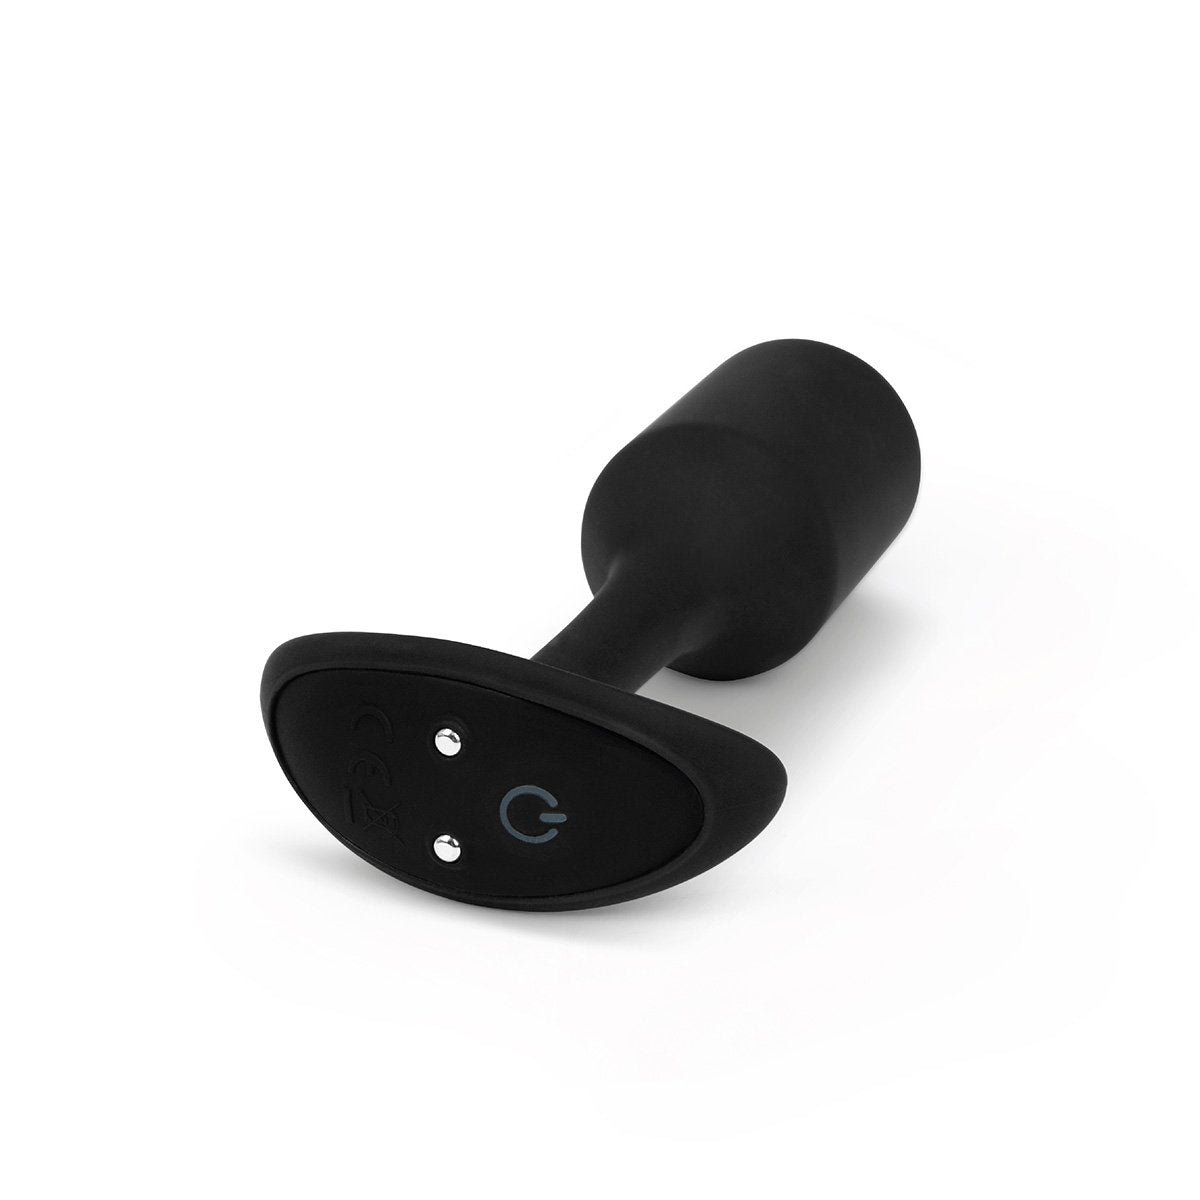 B-Vibe Snug Plug Vibrating - Buy At Luxury Toy X - Free 3-Day Shipping